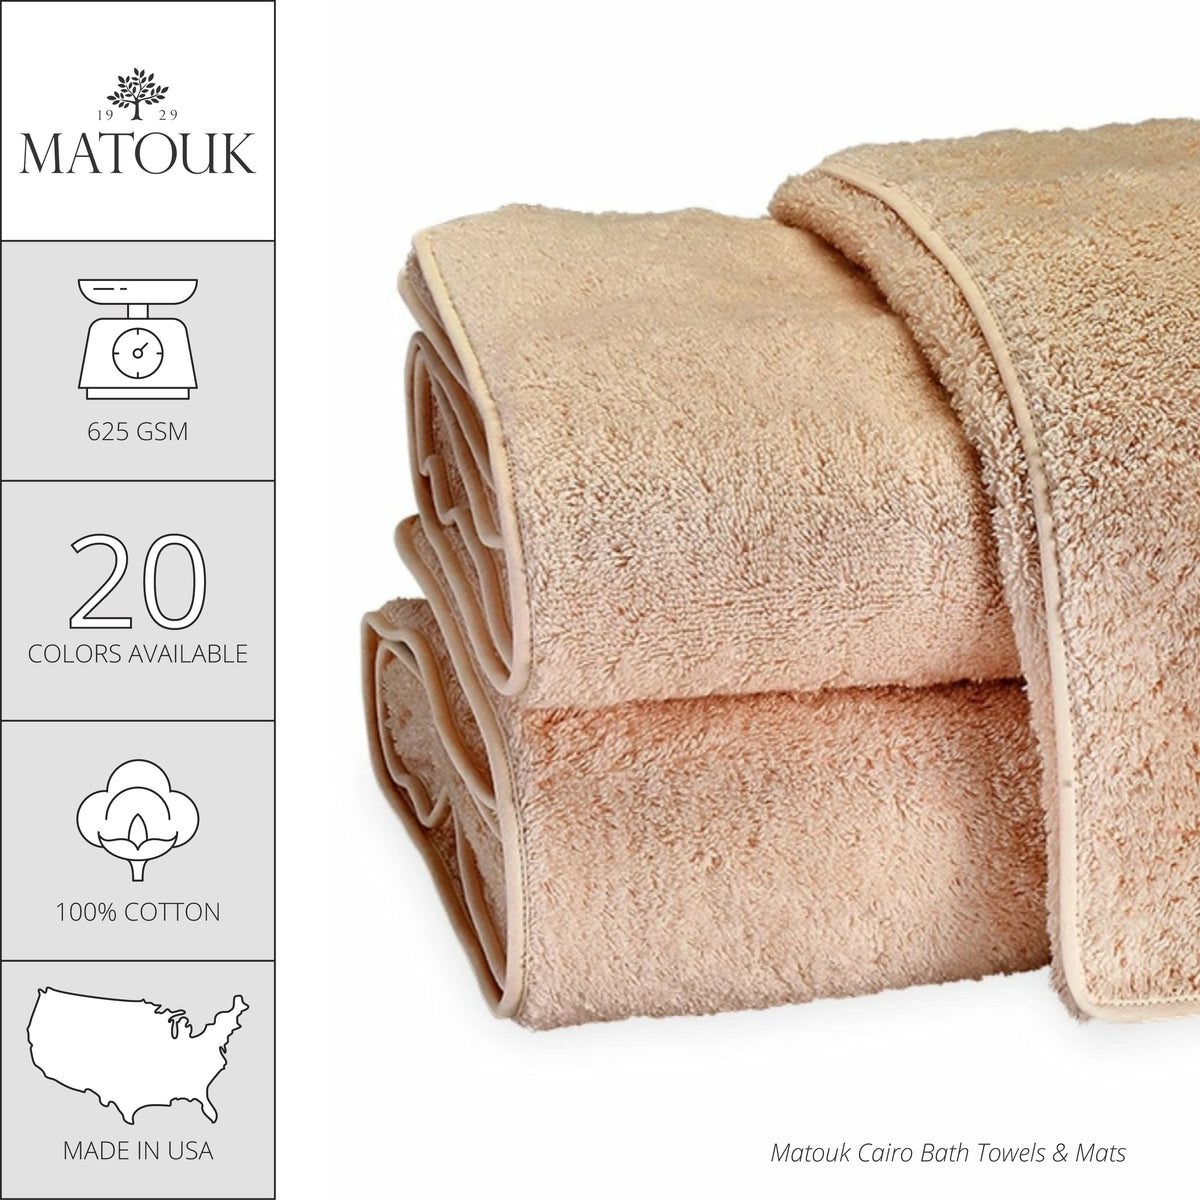 Matouk Cairo Bath Towels and Mats - White/Pool